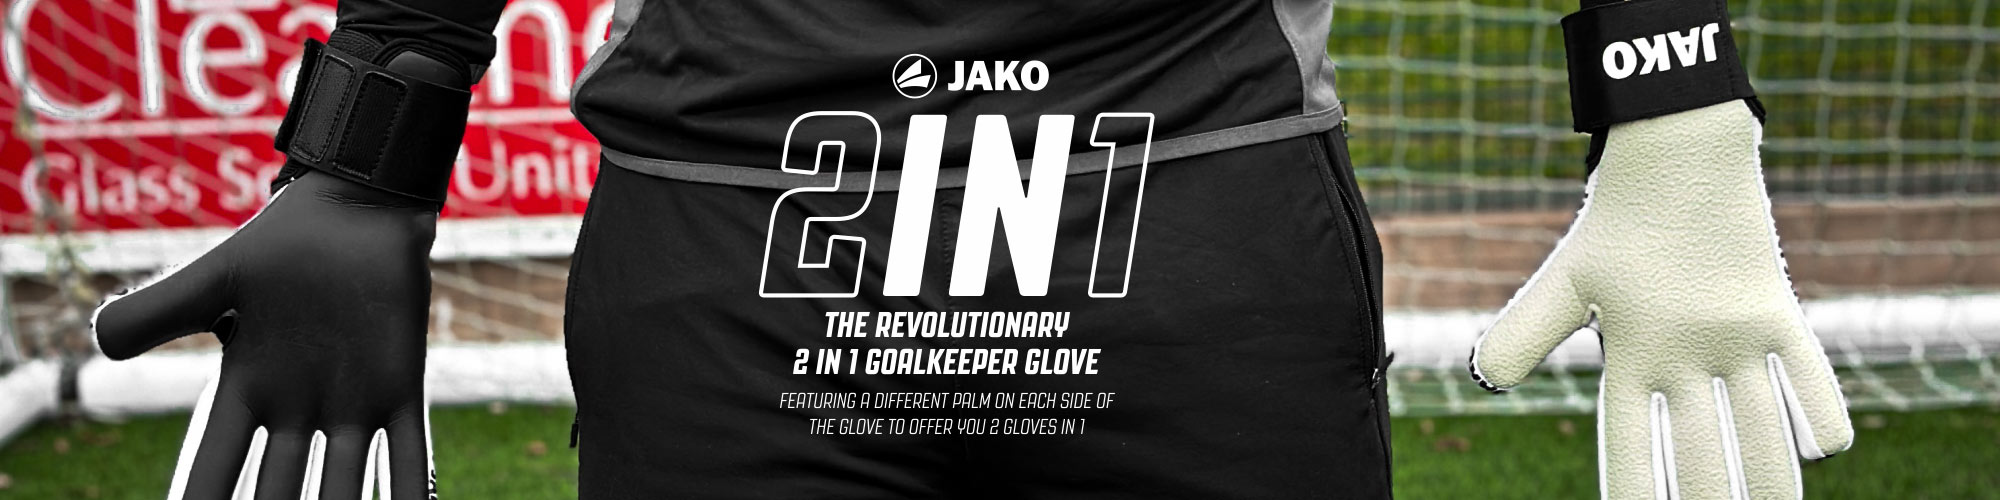 JAKO 2 in 1 Goalkeeper Gloves